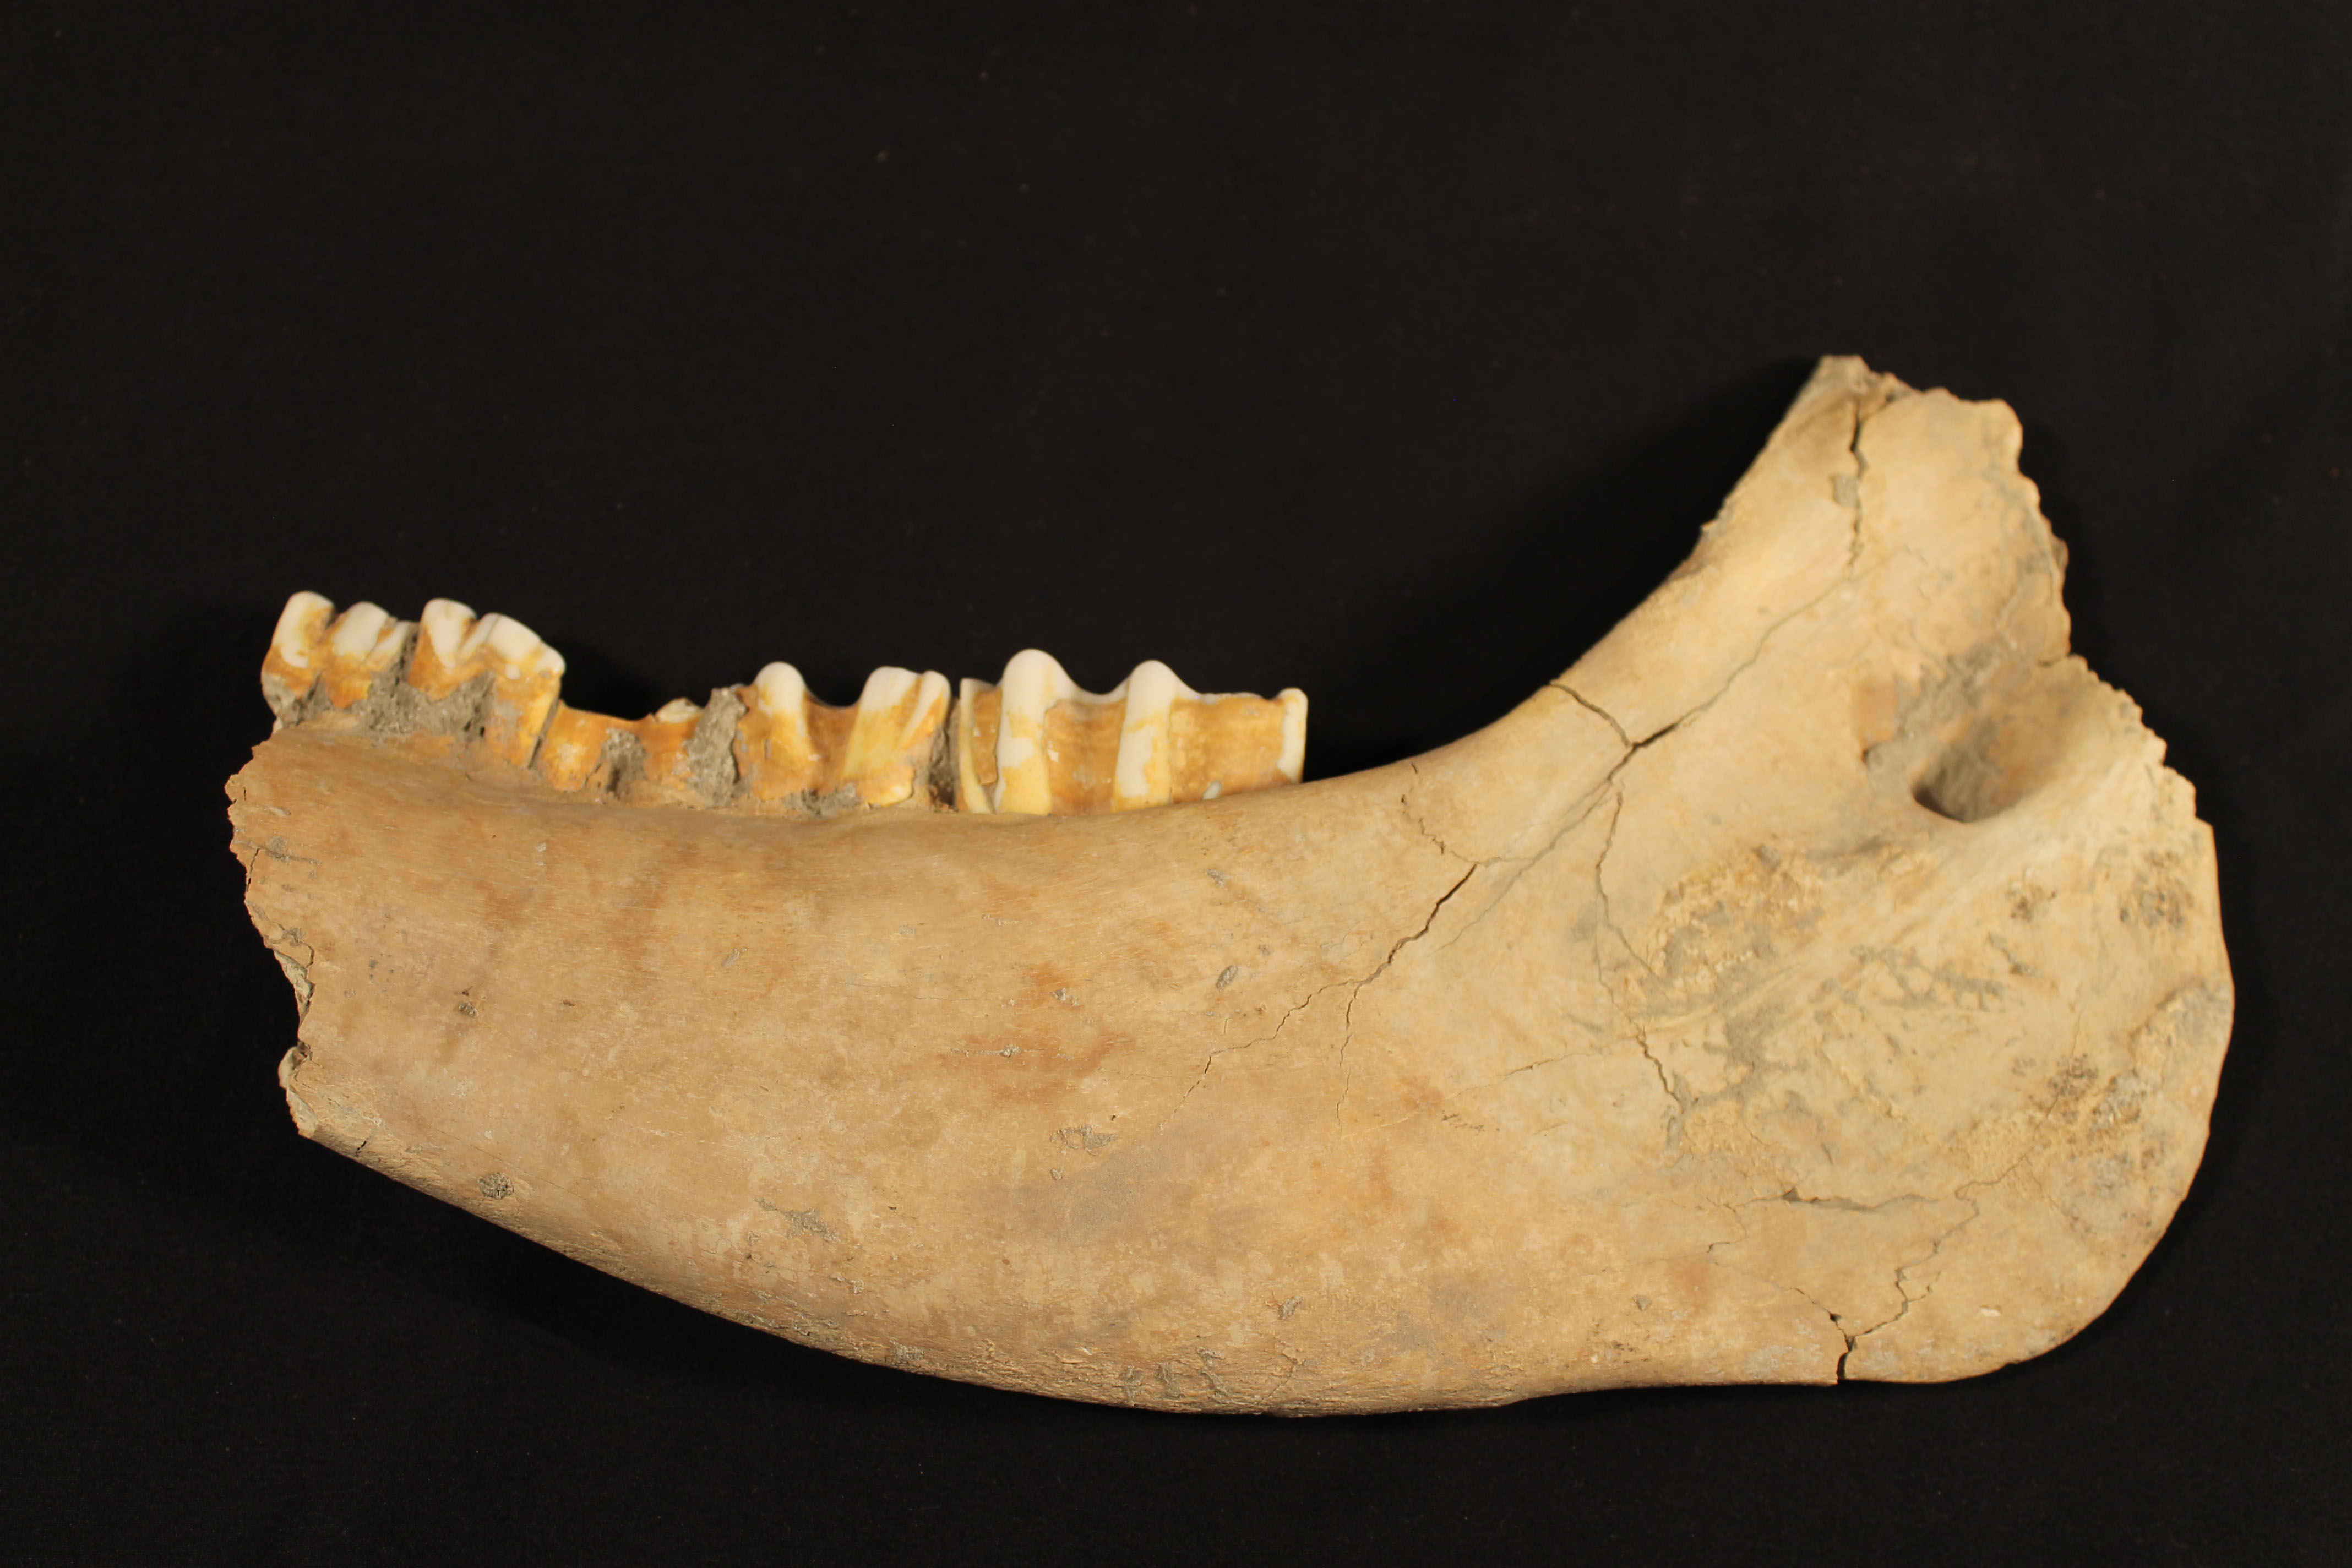 Broken mandible bone of a bison